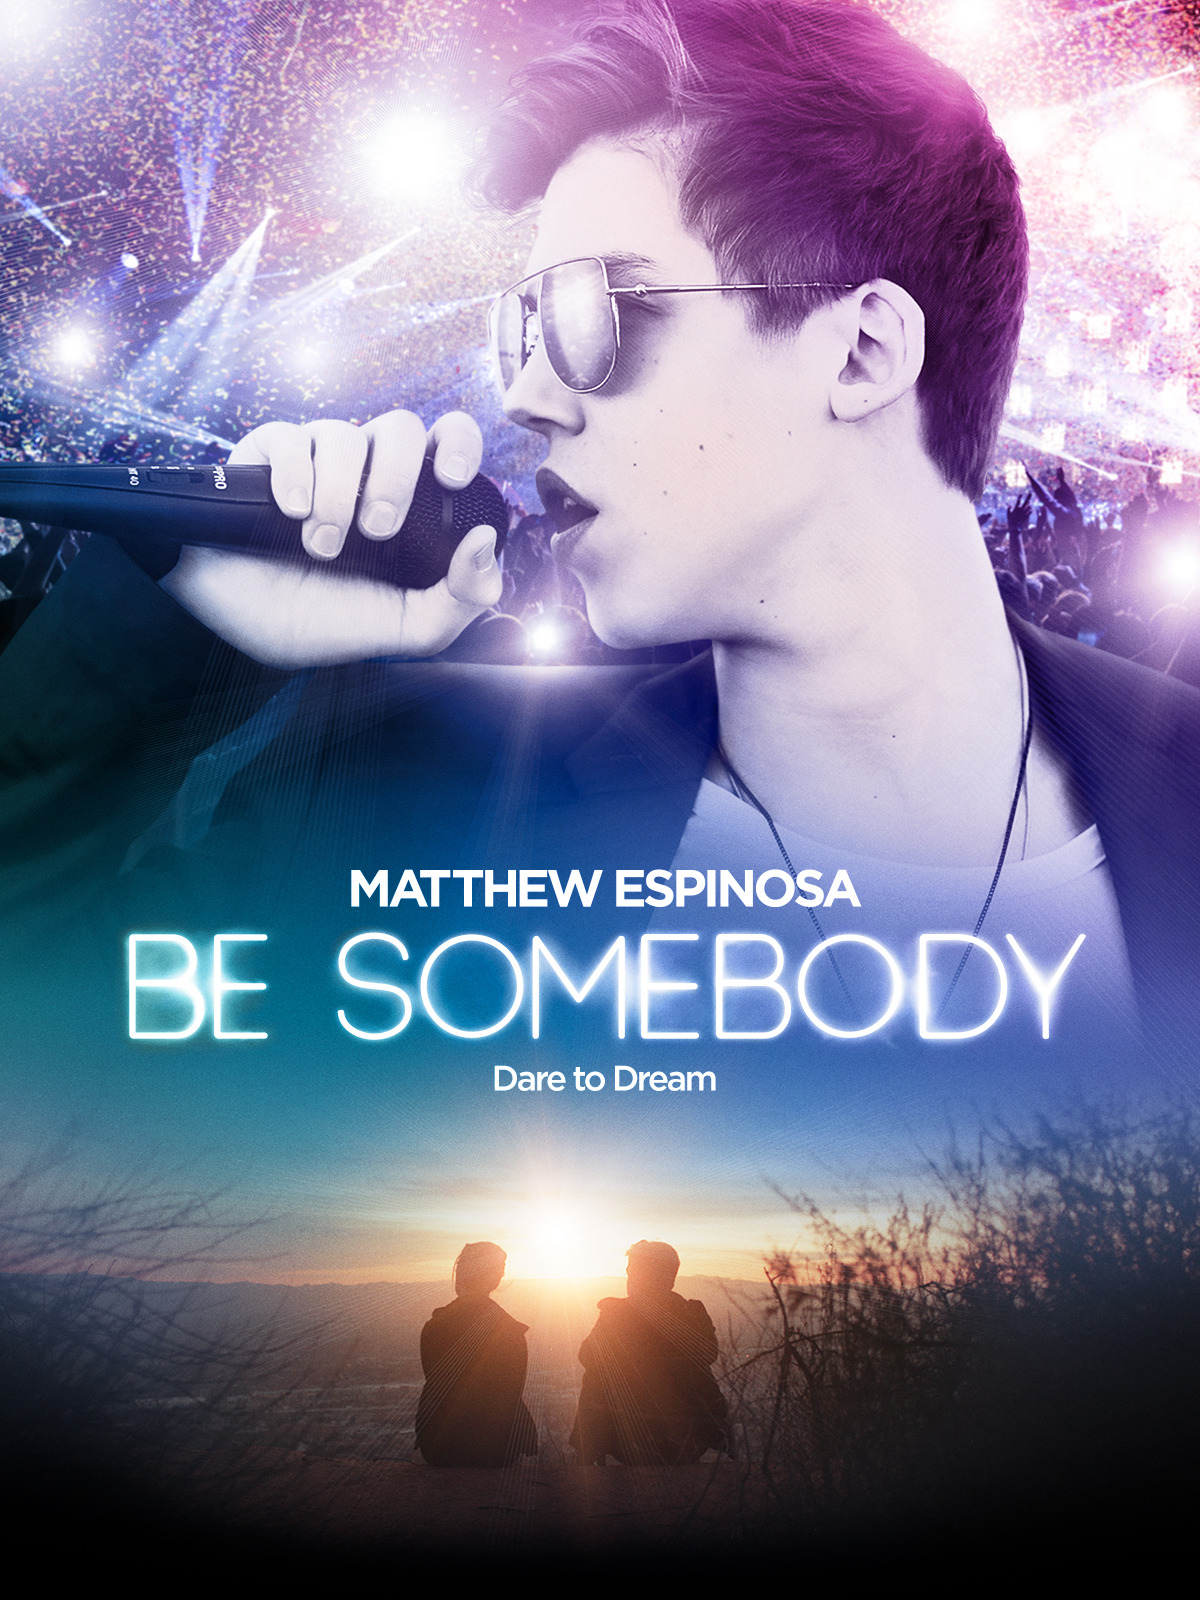 Be Somebody [HD] (2016)